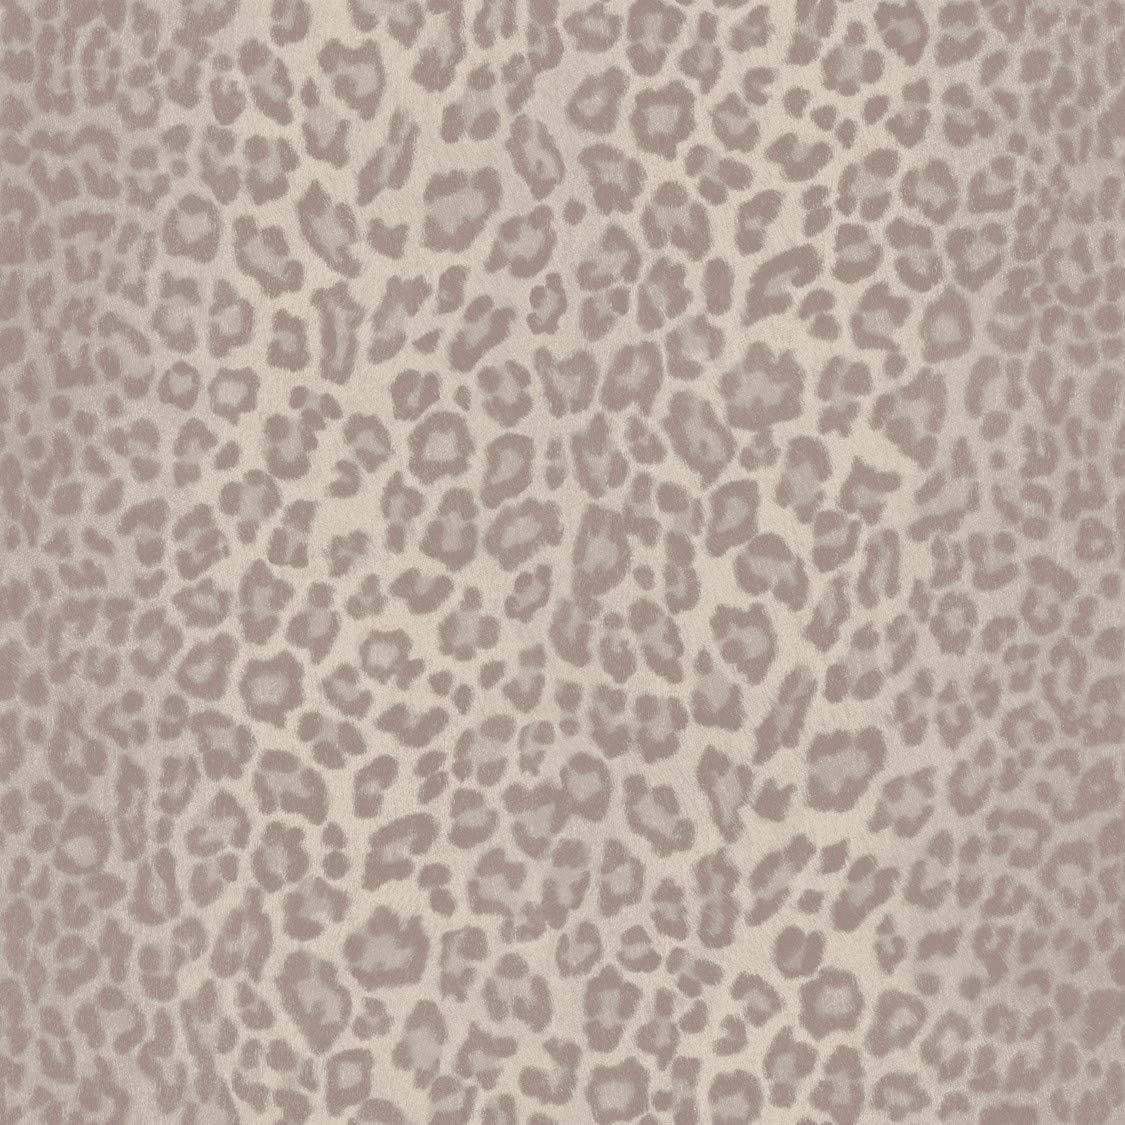 Fine D Cor M1500 Glamorous Fur Natural Wallpaper White Amazon